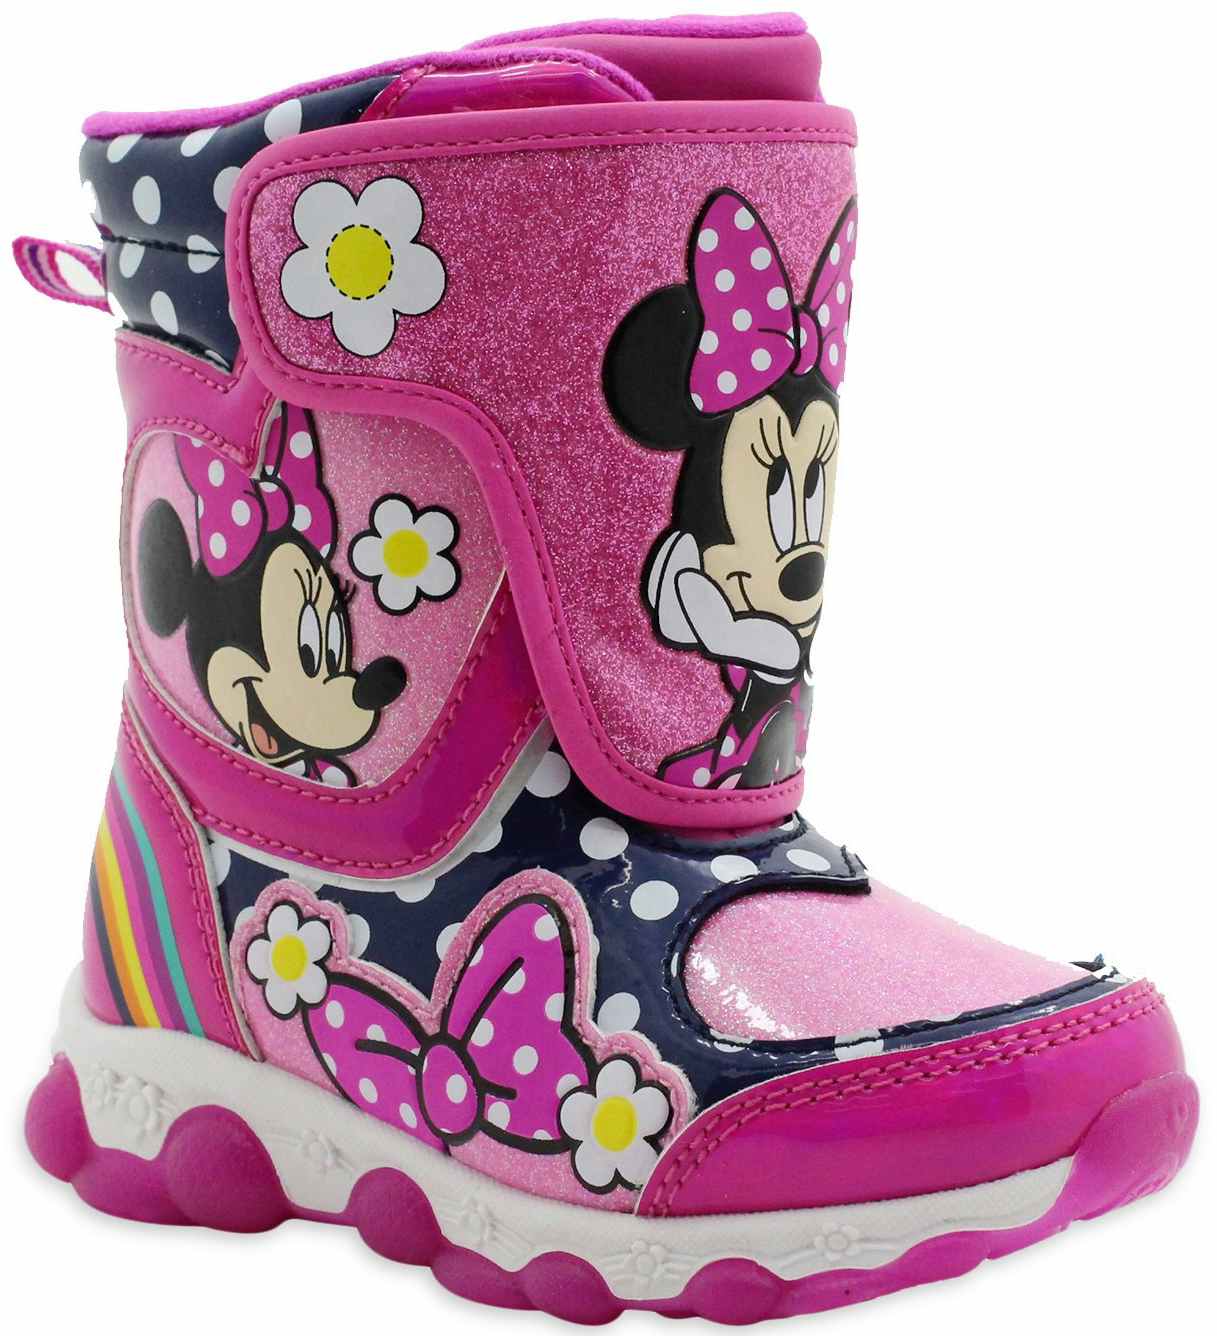 Disney Minnie Mouse Girls Light Up Winter Boots